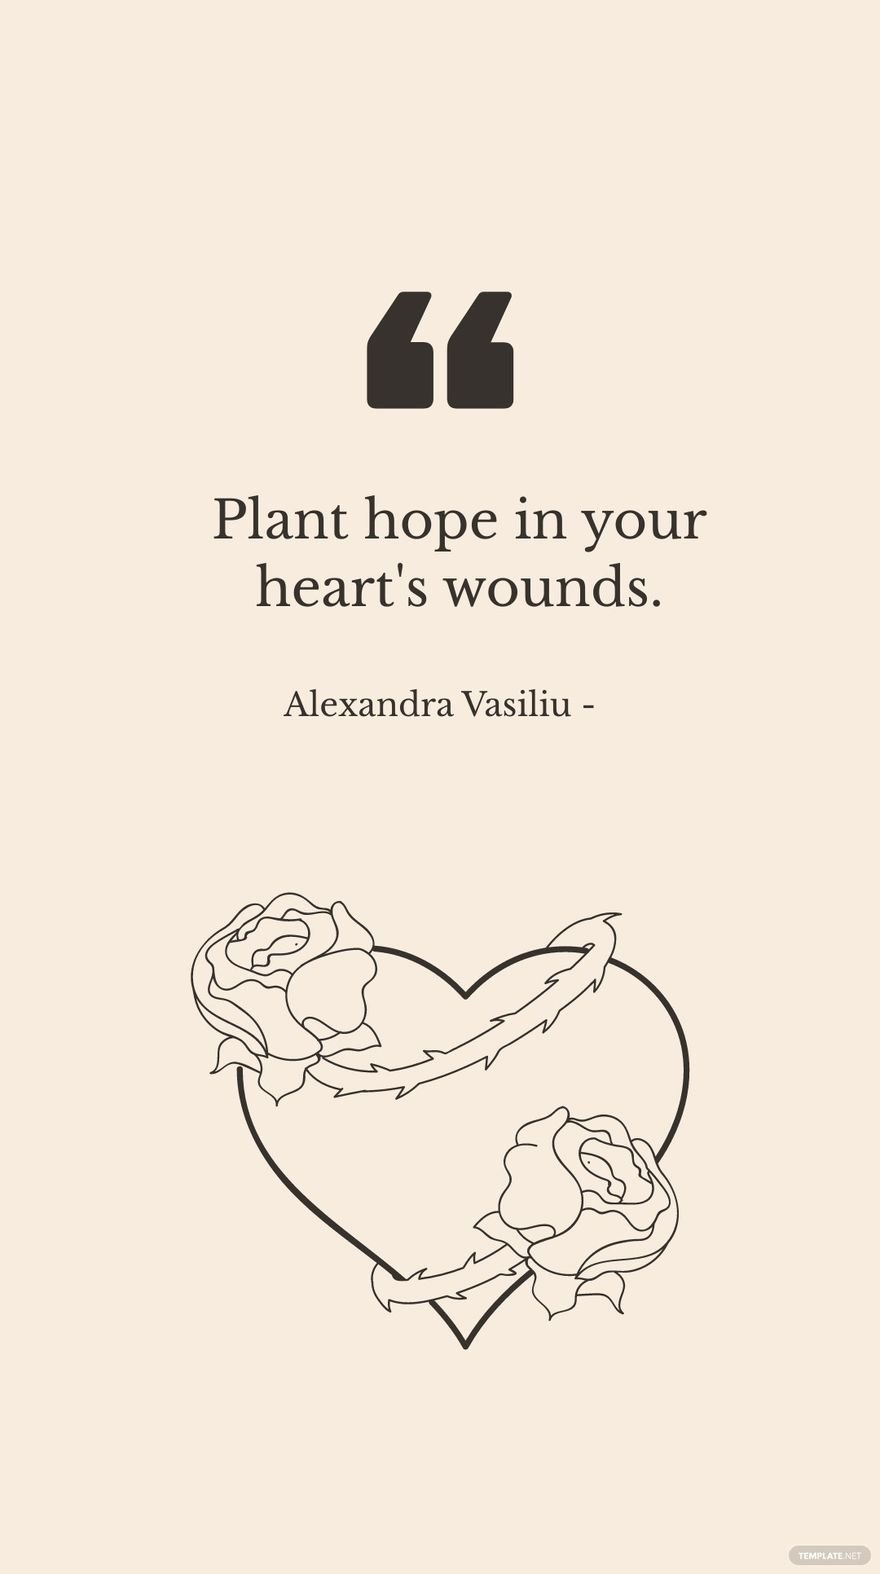 Free Alexandra Vasiliu - Plant hope in your heart's wounds. in JPG